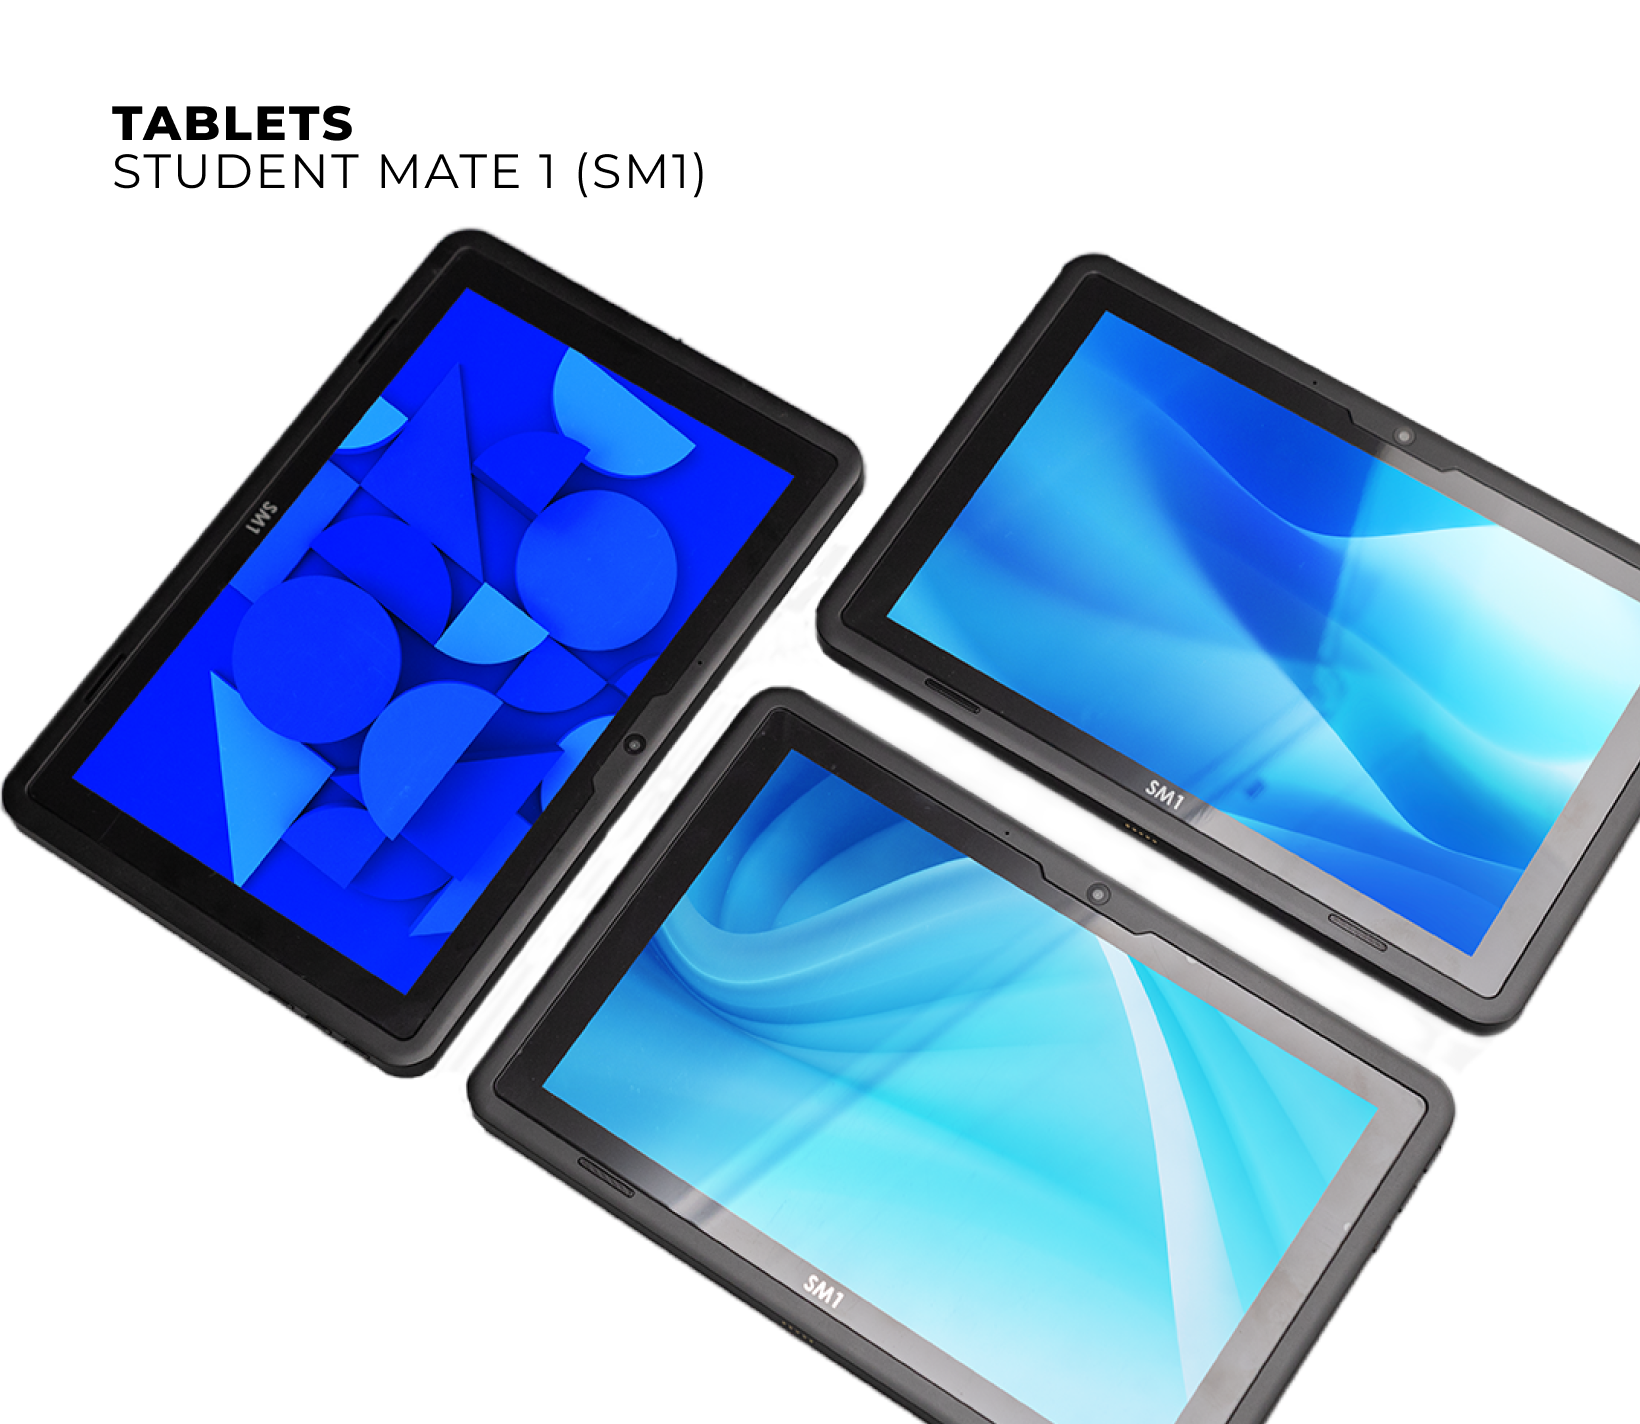 Sm1 tablets